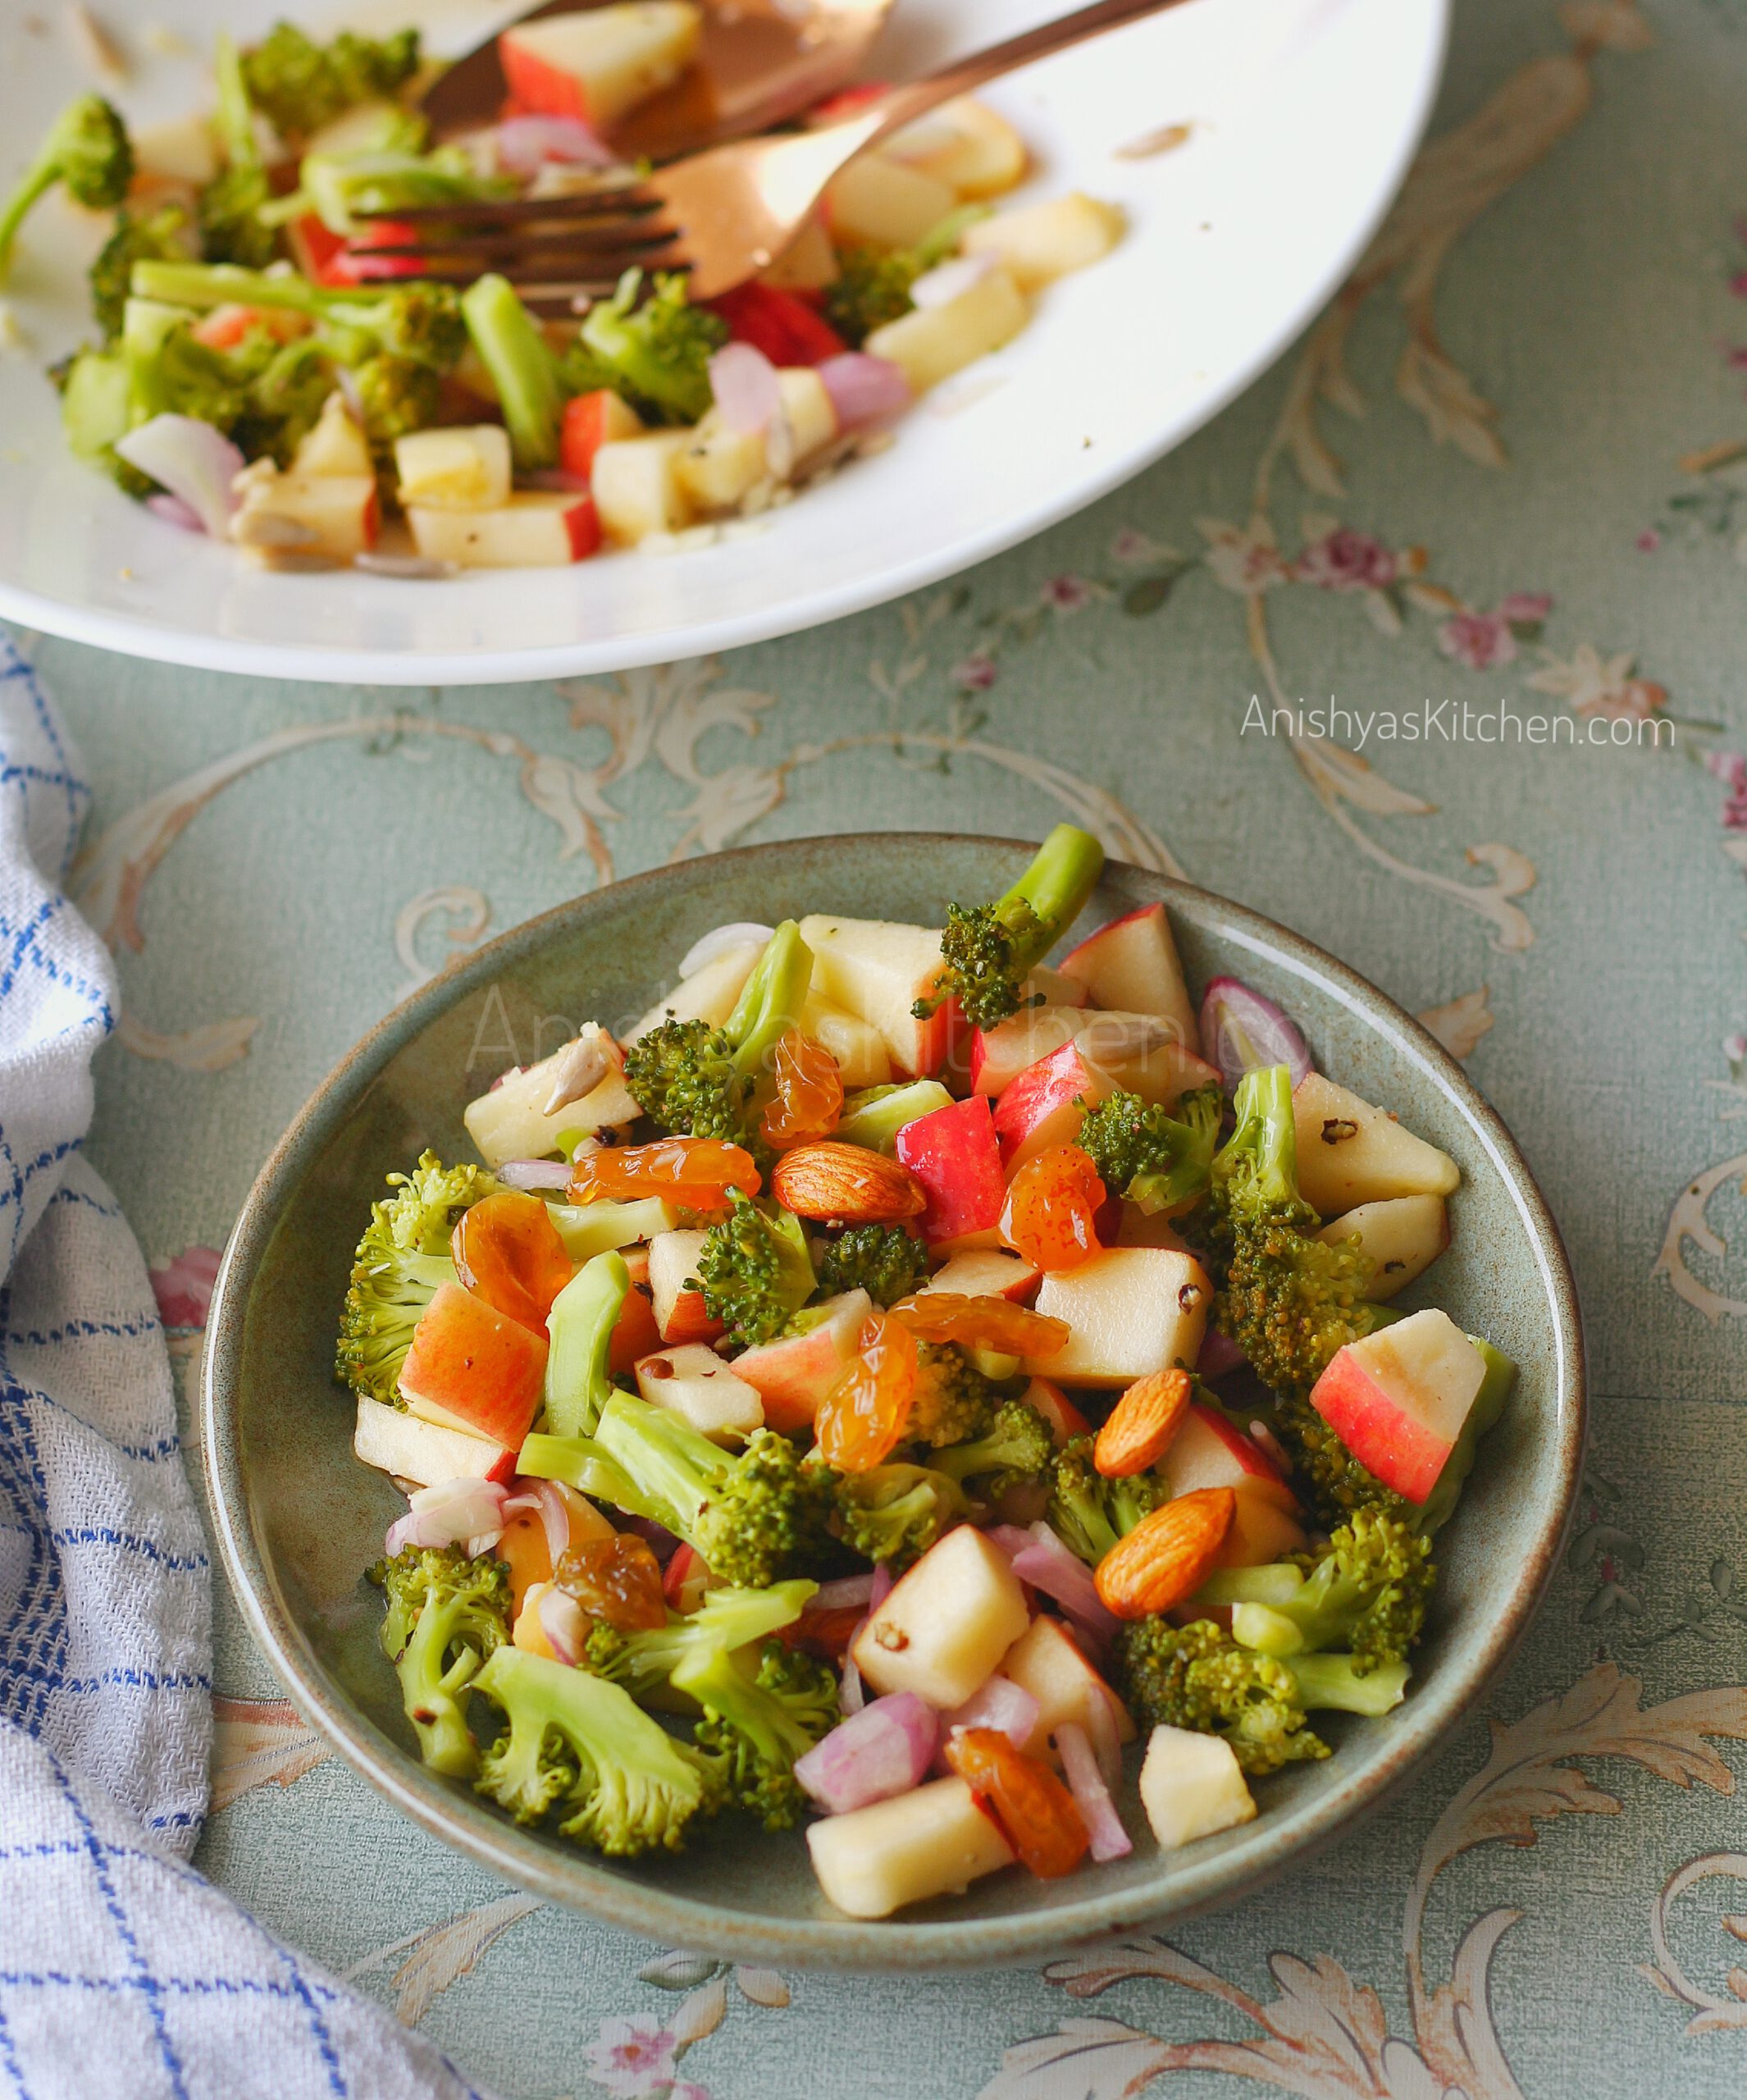 Healthy-Apple-broccoli-salad-tasty-salad-broccoli-salad-diet-friendly-vegan-salad2